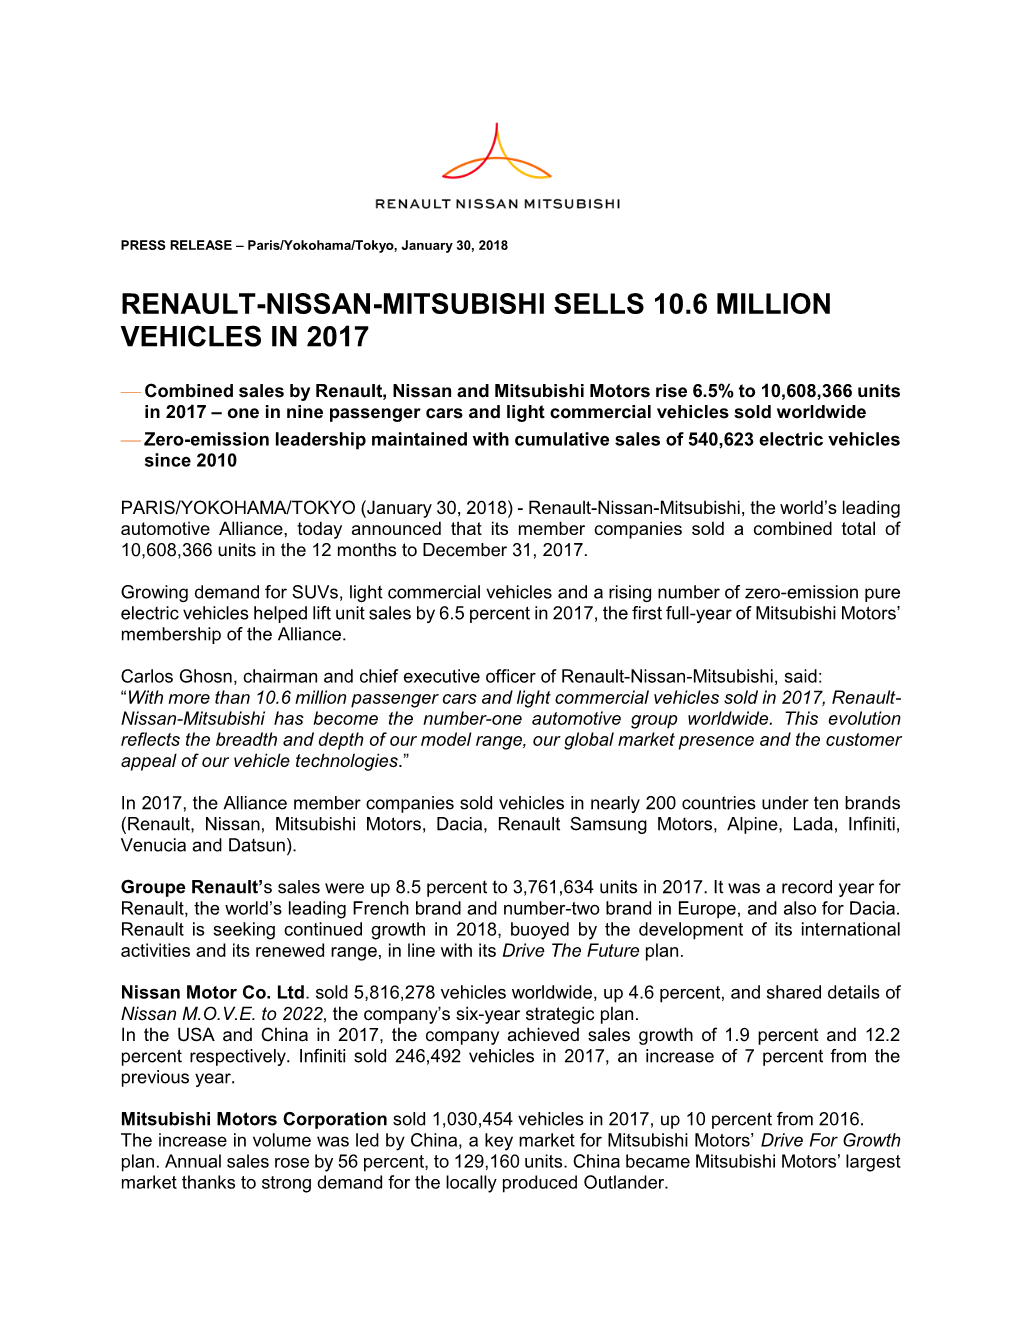 Renault-Nissan-Mitsubishi Sells 10.6 Million Vehicles in 2017